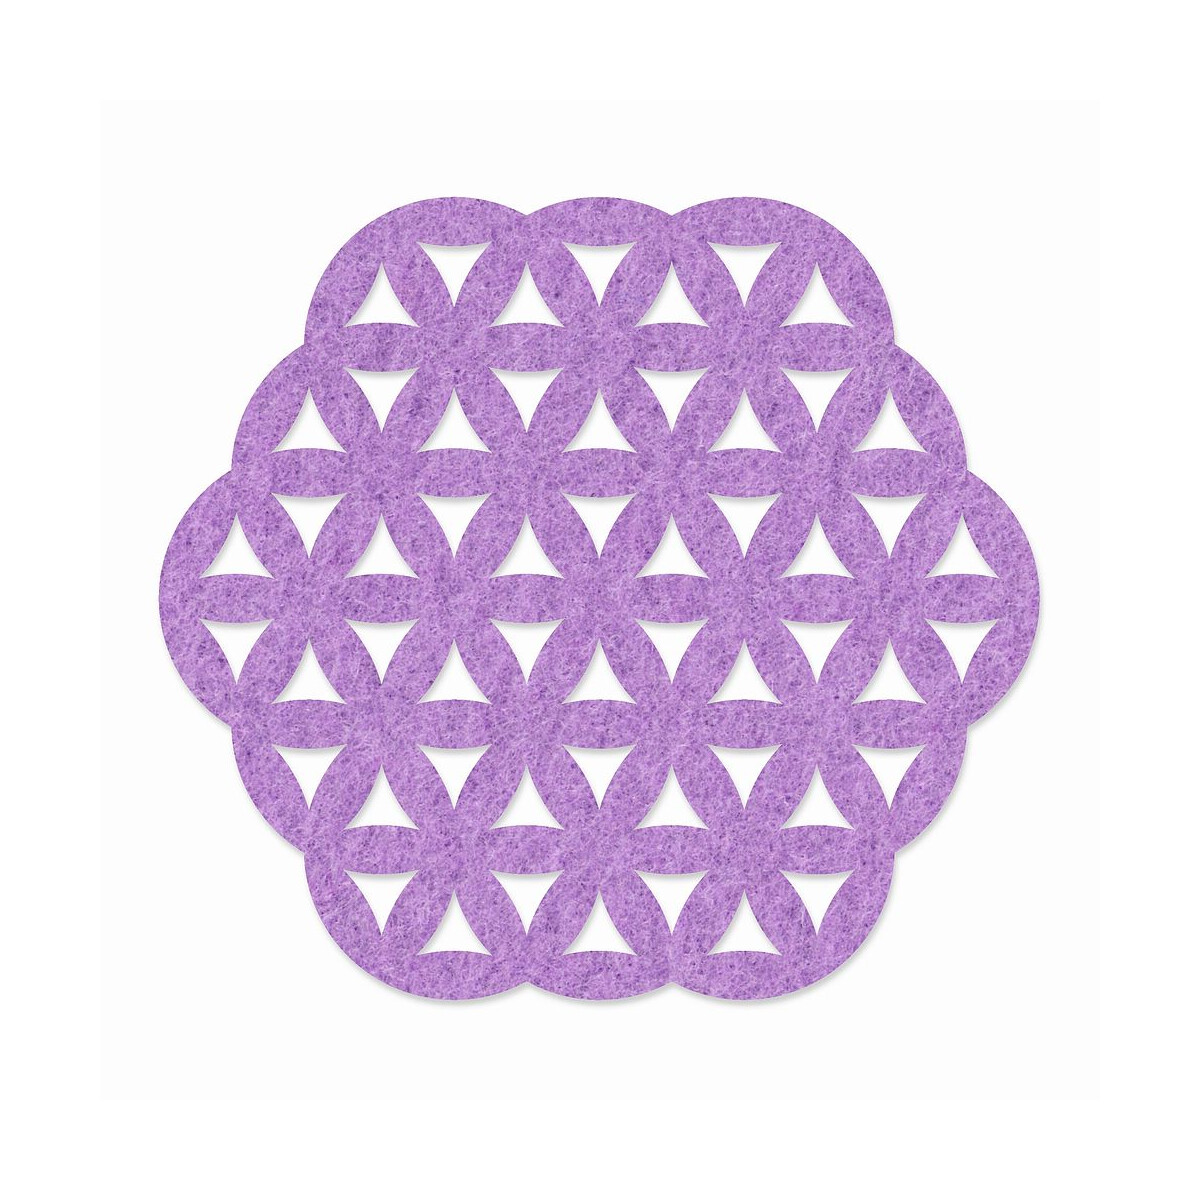 1 x FILZ Untersetzer Sechseck mit Muster 15 cm - lavendel